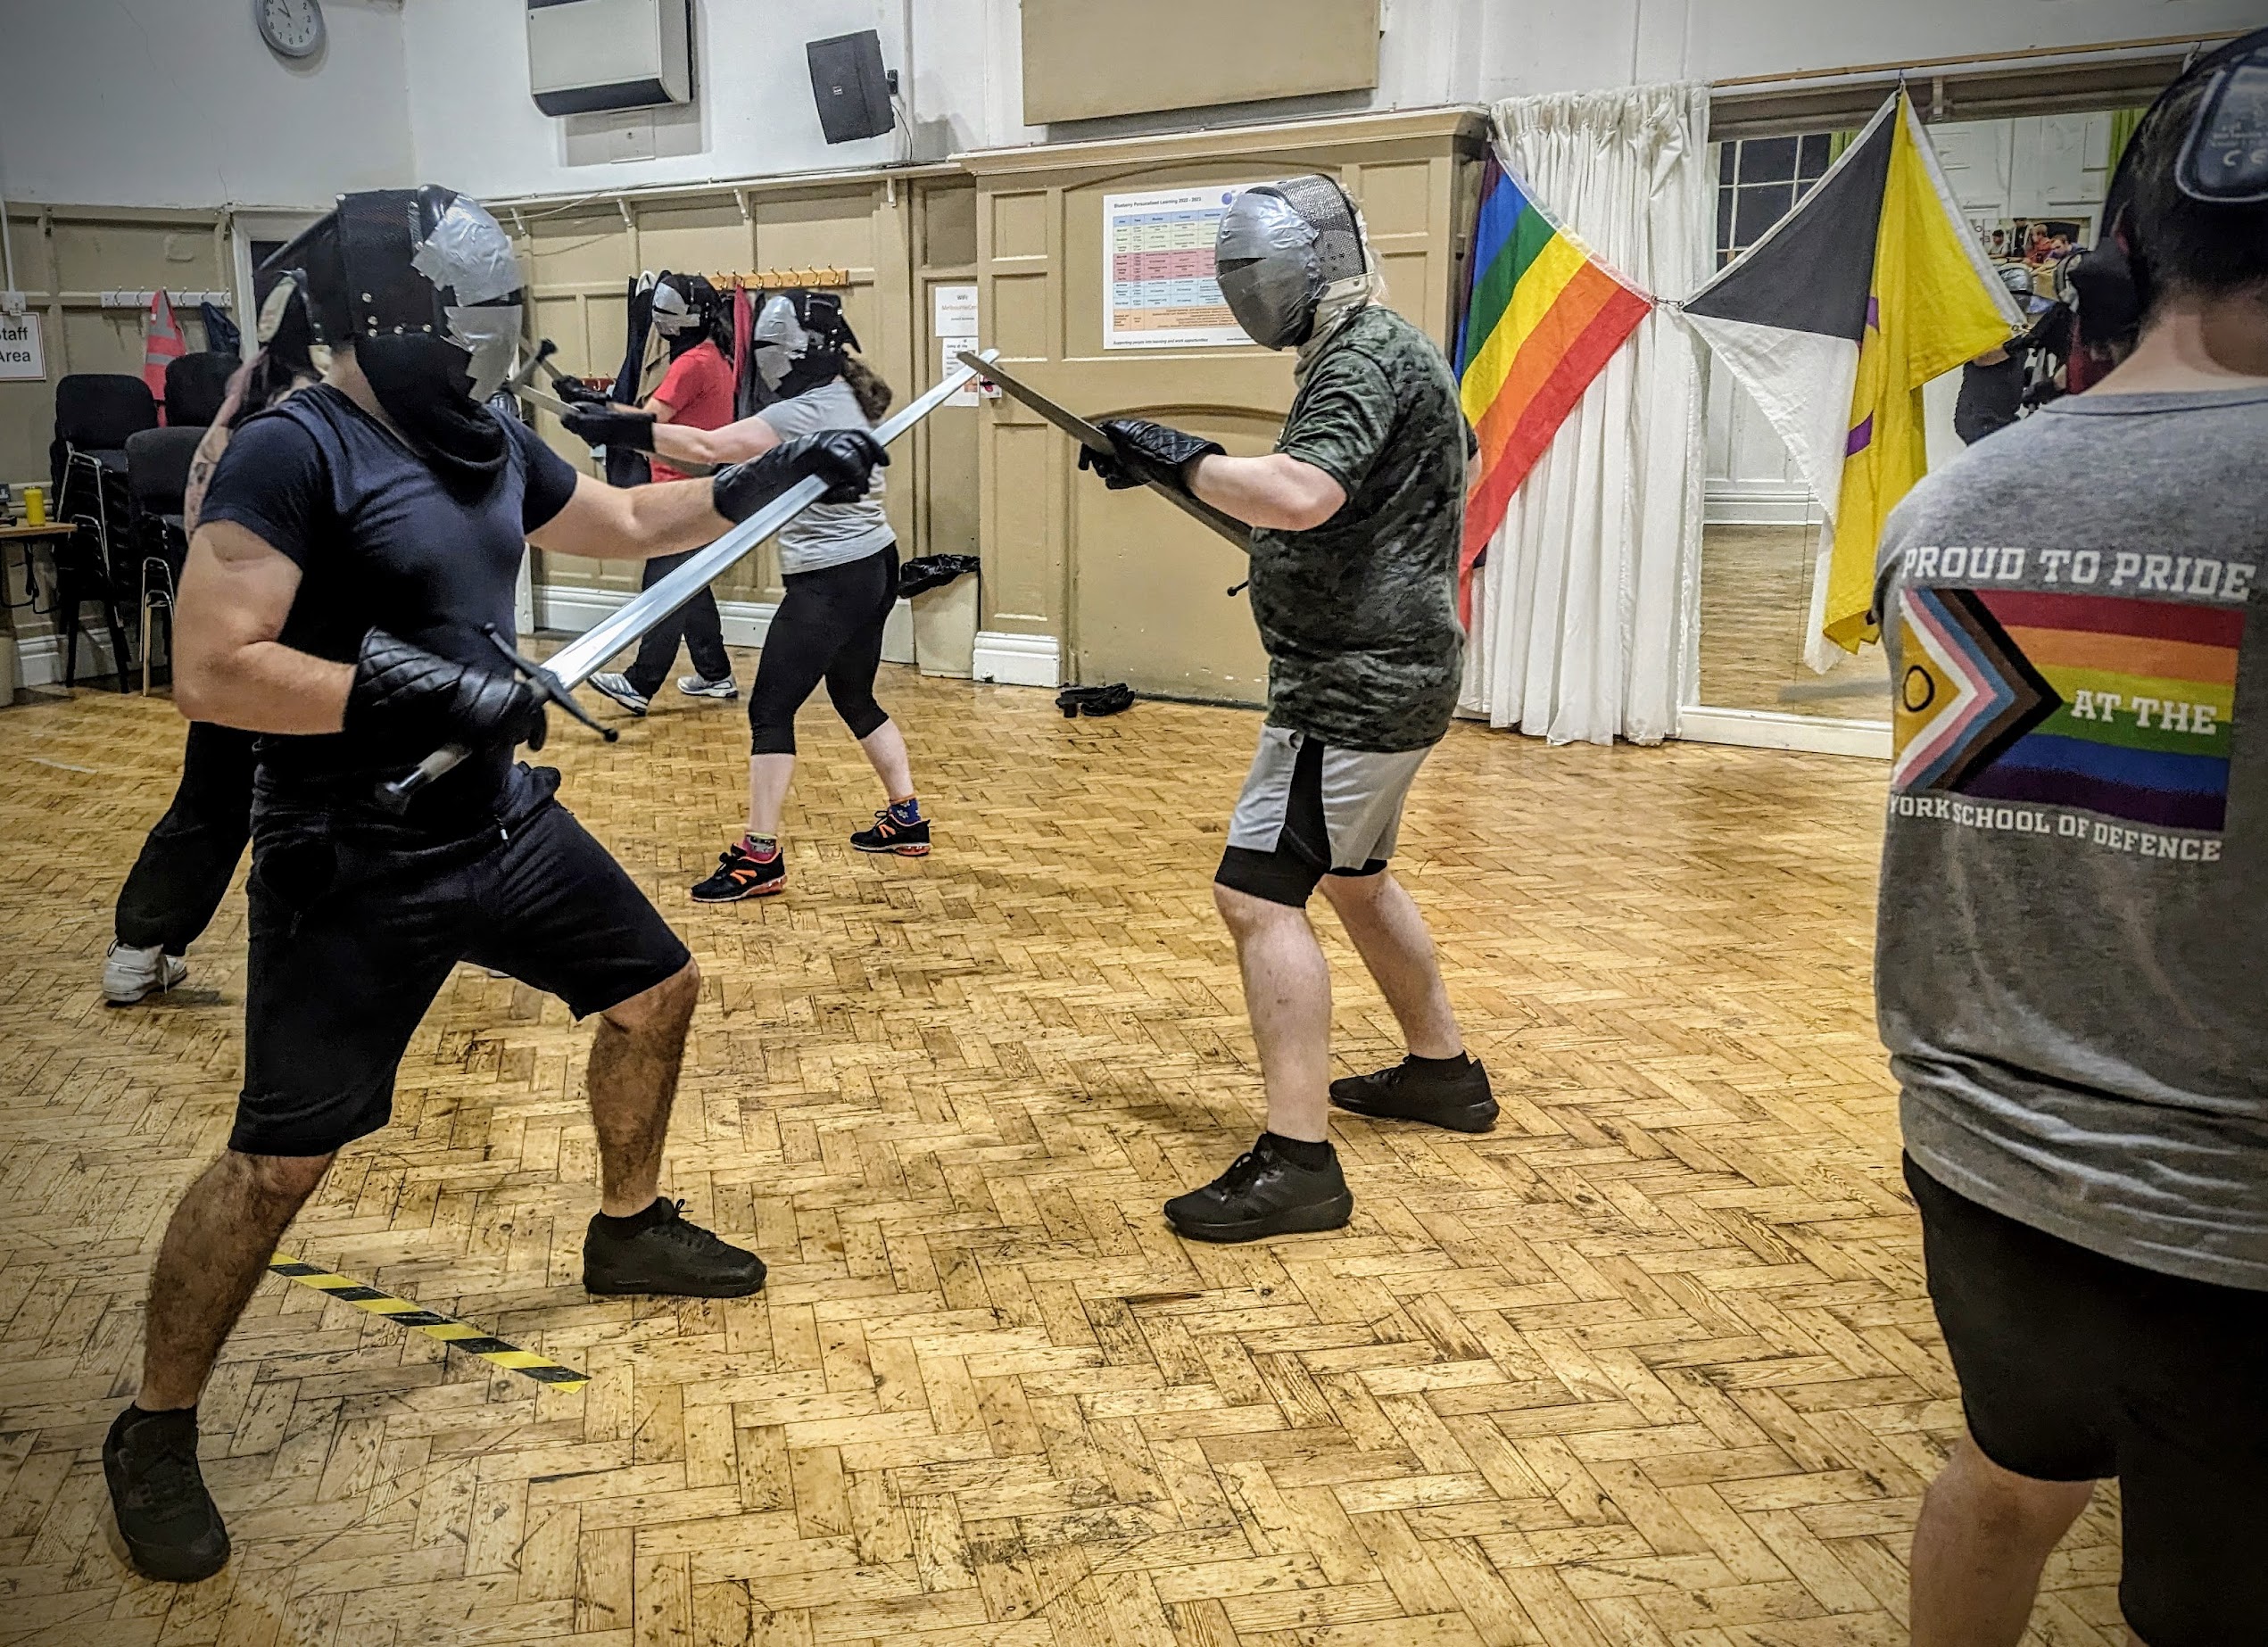 Eskrima & Stick Fighting – York School of Defence